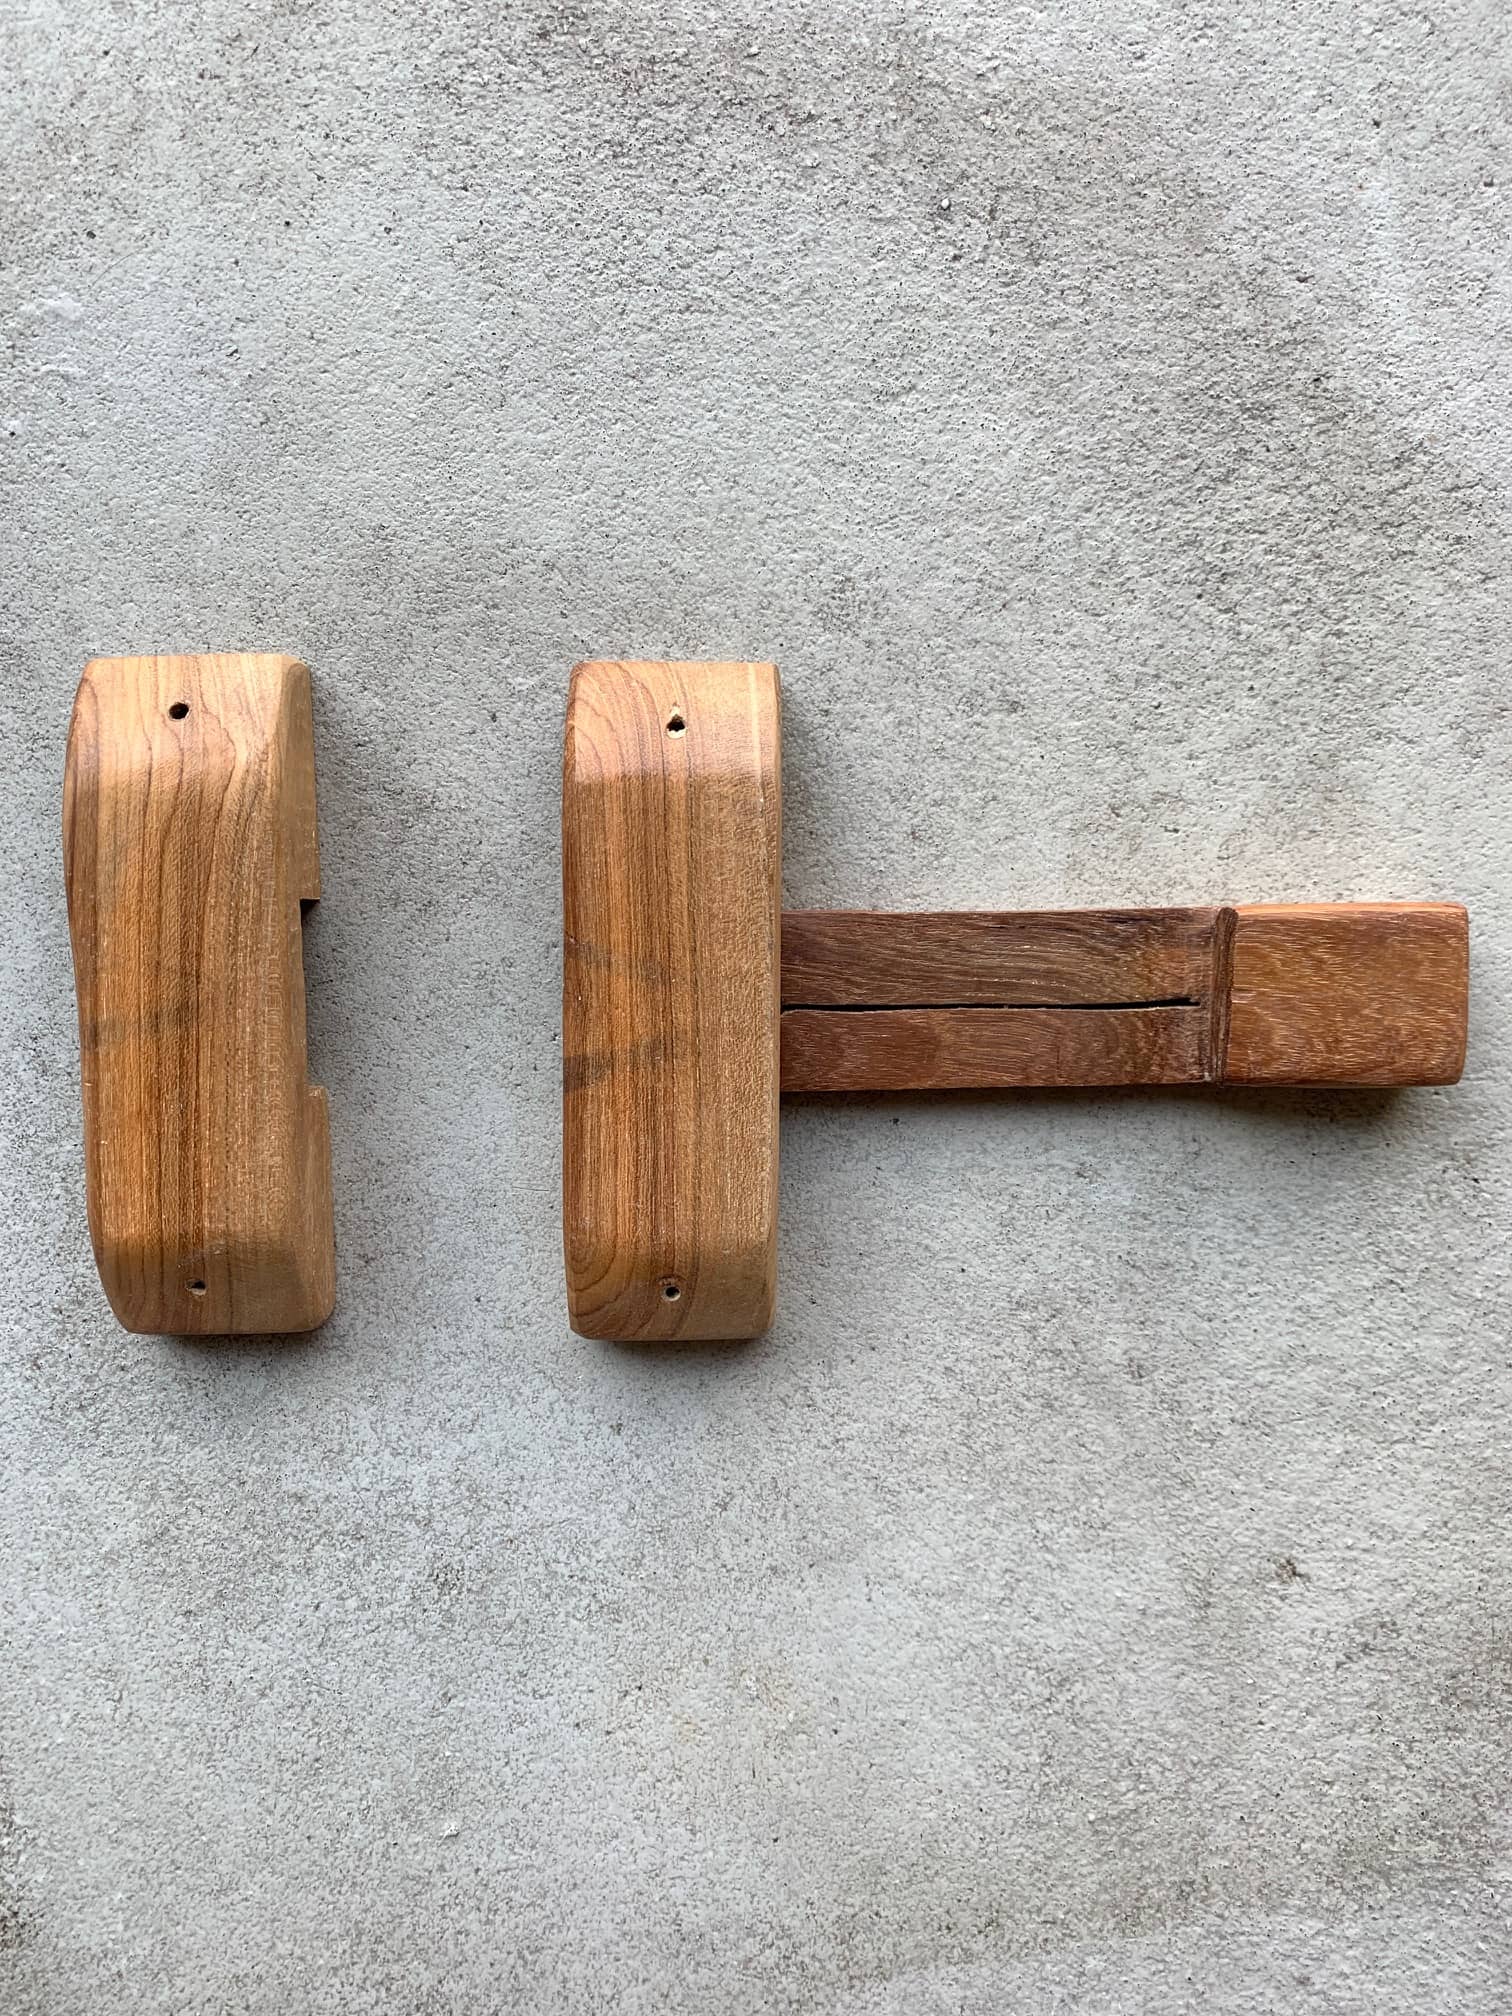 Türriegel aus Holz handgefertigt » Dari Asia - Antike Türen